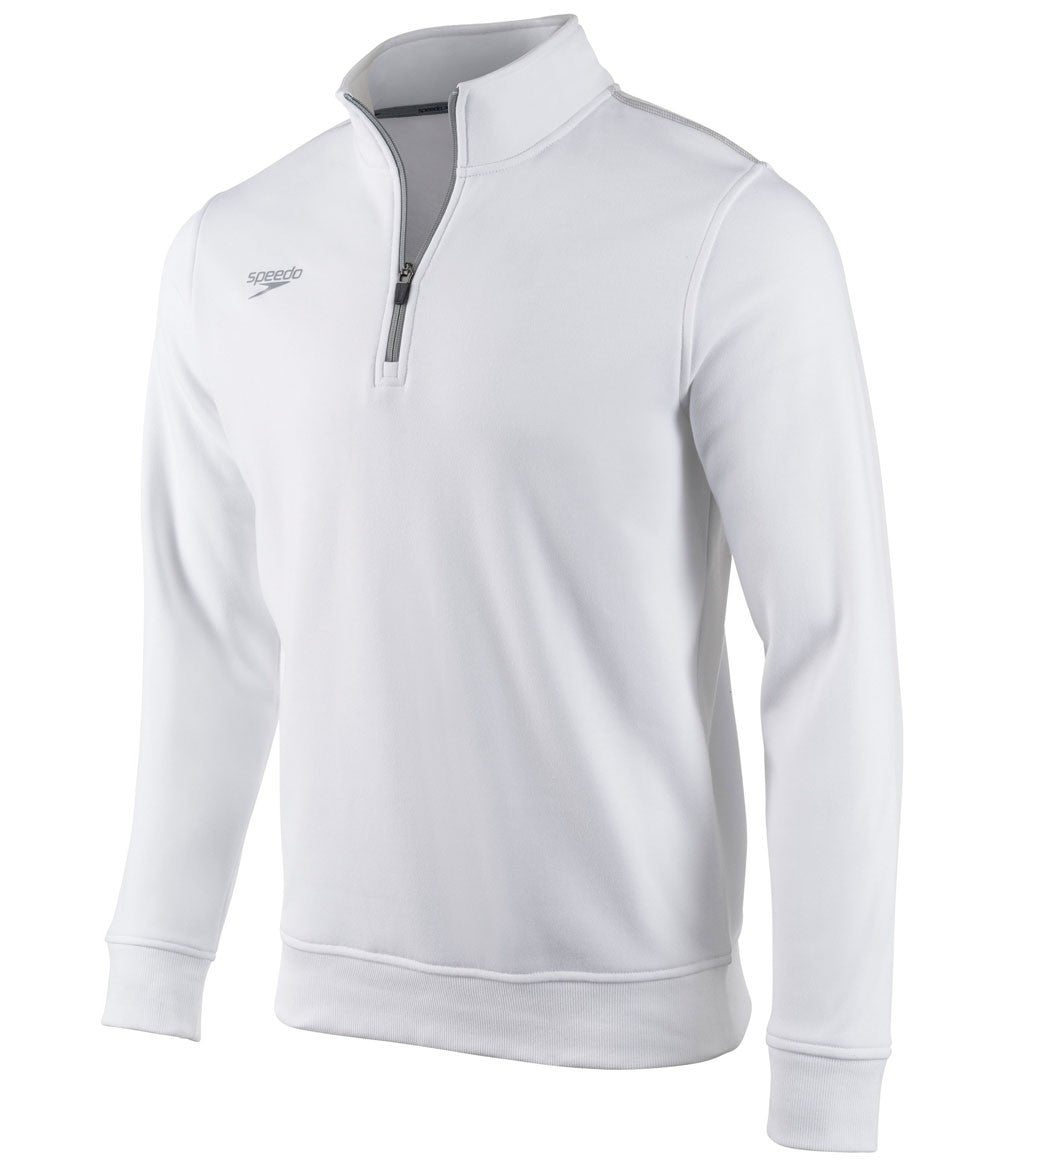 Speedo Unisex 1/4 Zip Long Sleeve Sweatshirt